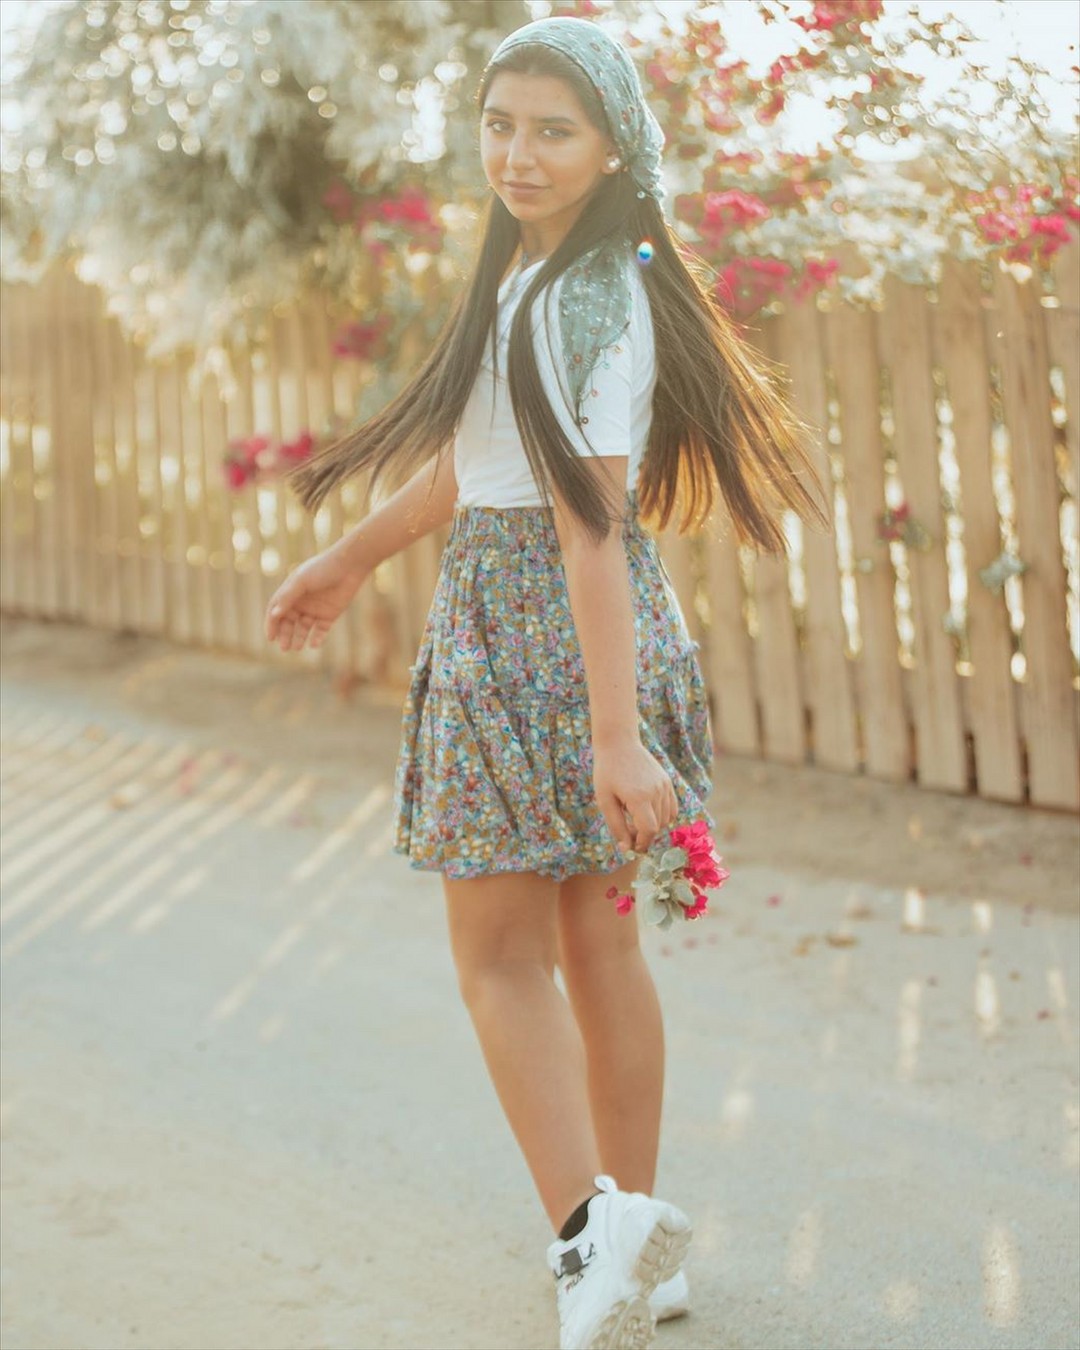 Ghrour Safar Short Skirt Teen Girl Photo 03